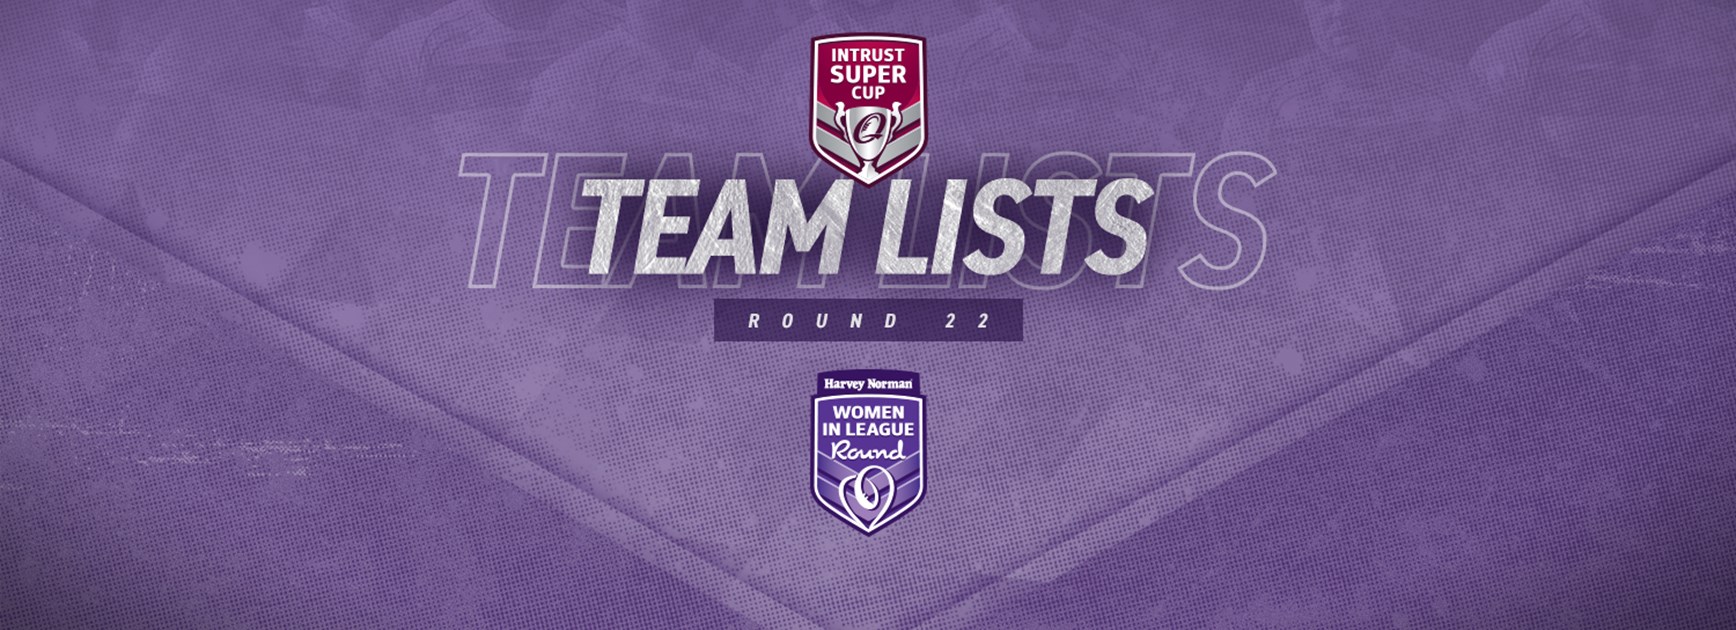 Intrust Super Cup Round 22 team lists